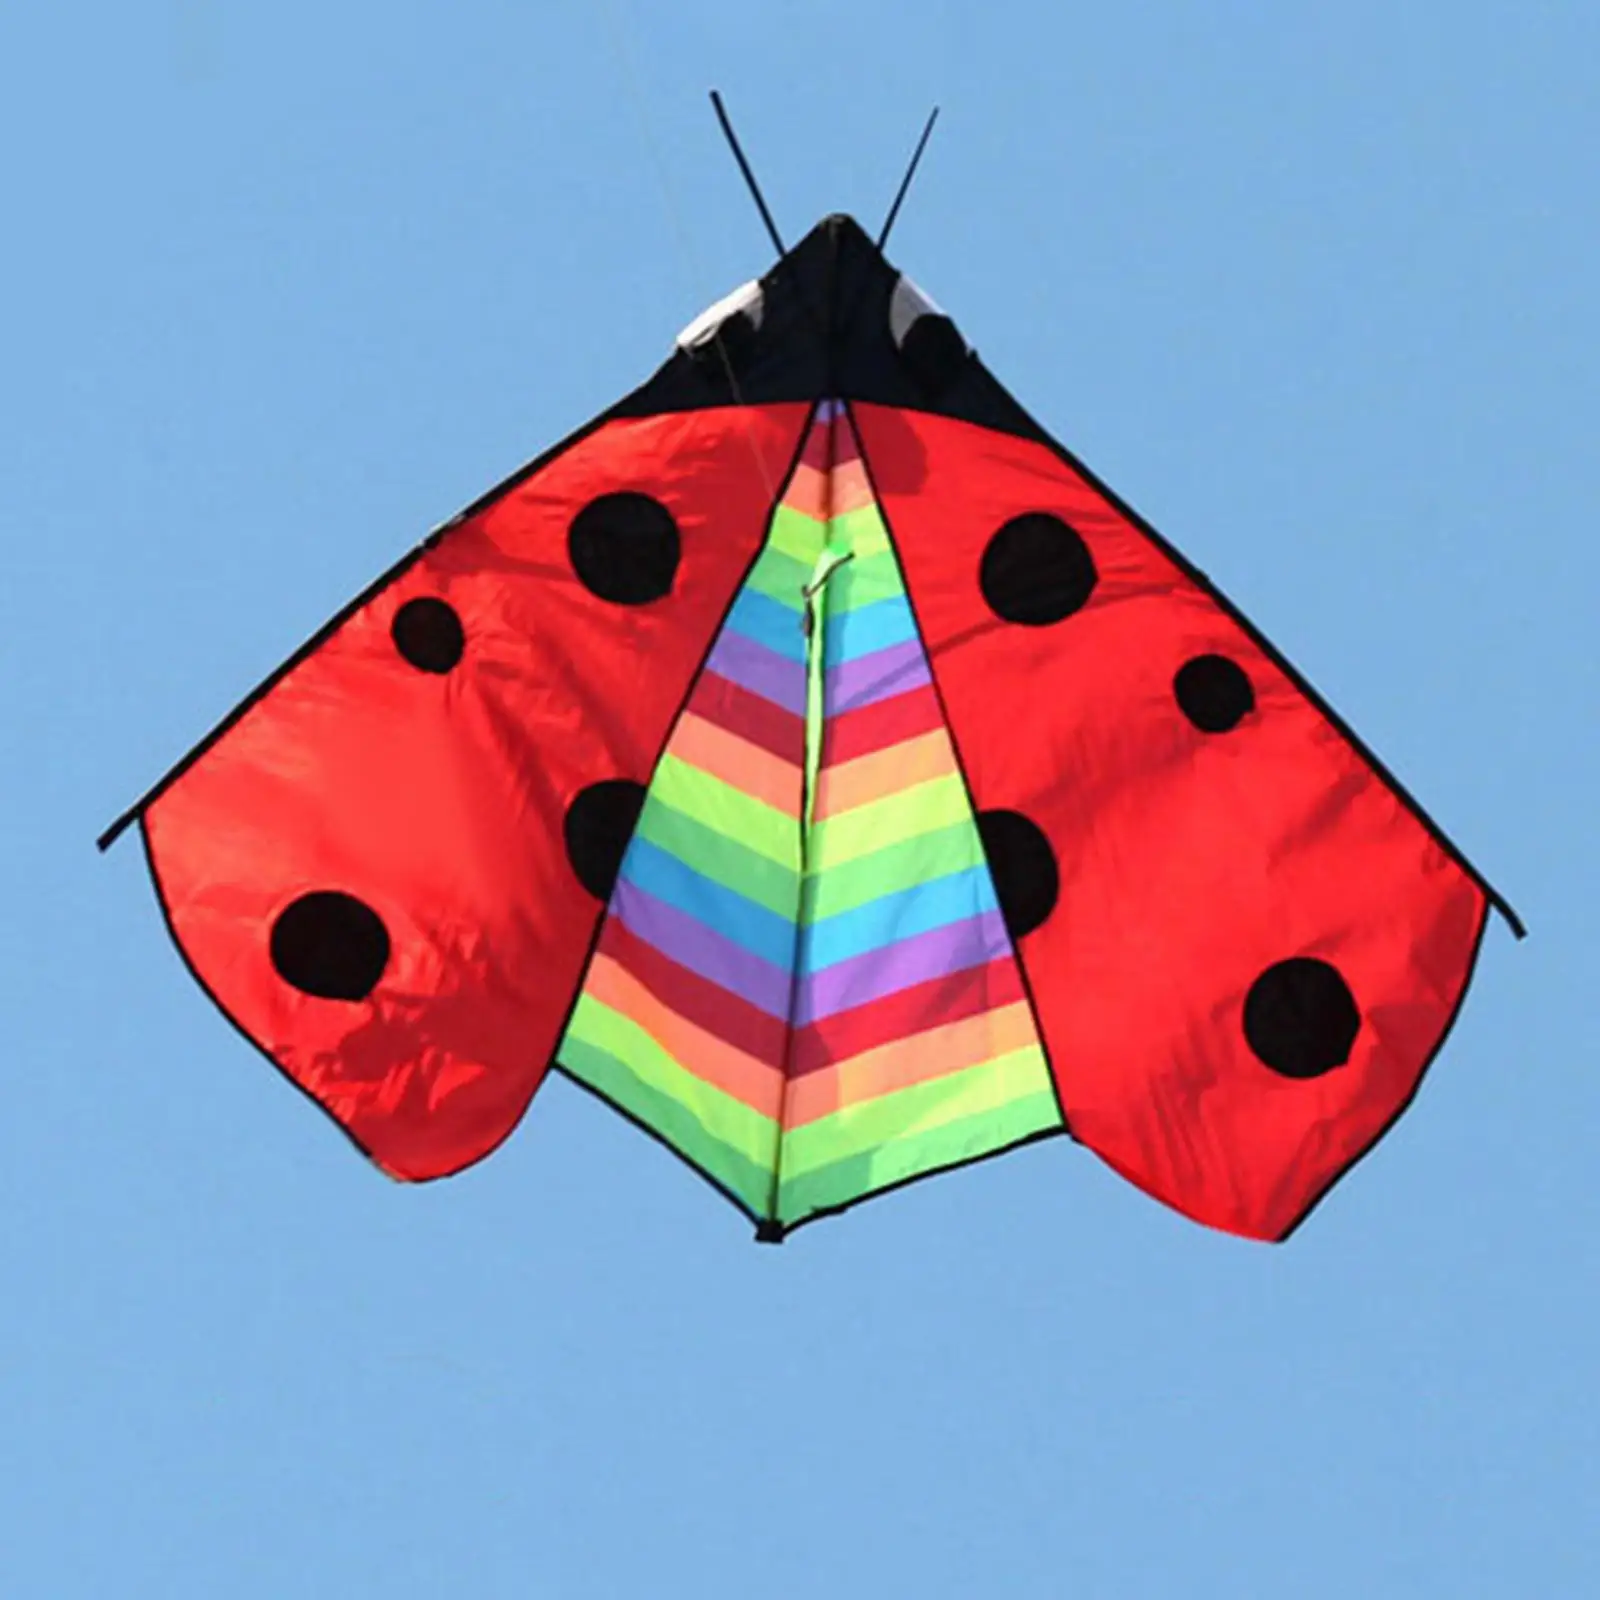 Large Triangle Ladybug Kite Fly Kite Single-Line Flying Toys Novelty Delta Kite for Park Outdoor Family Trips Beach Holiday